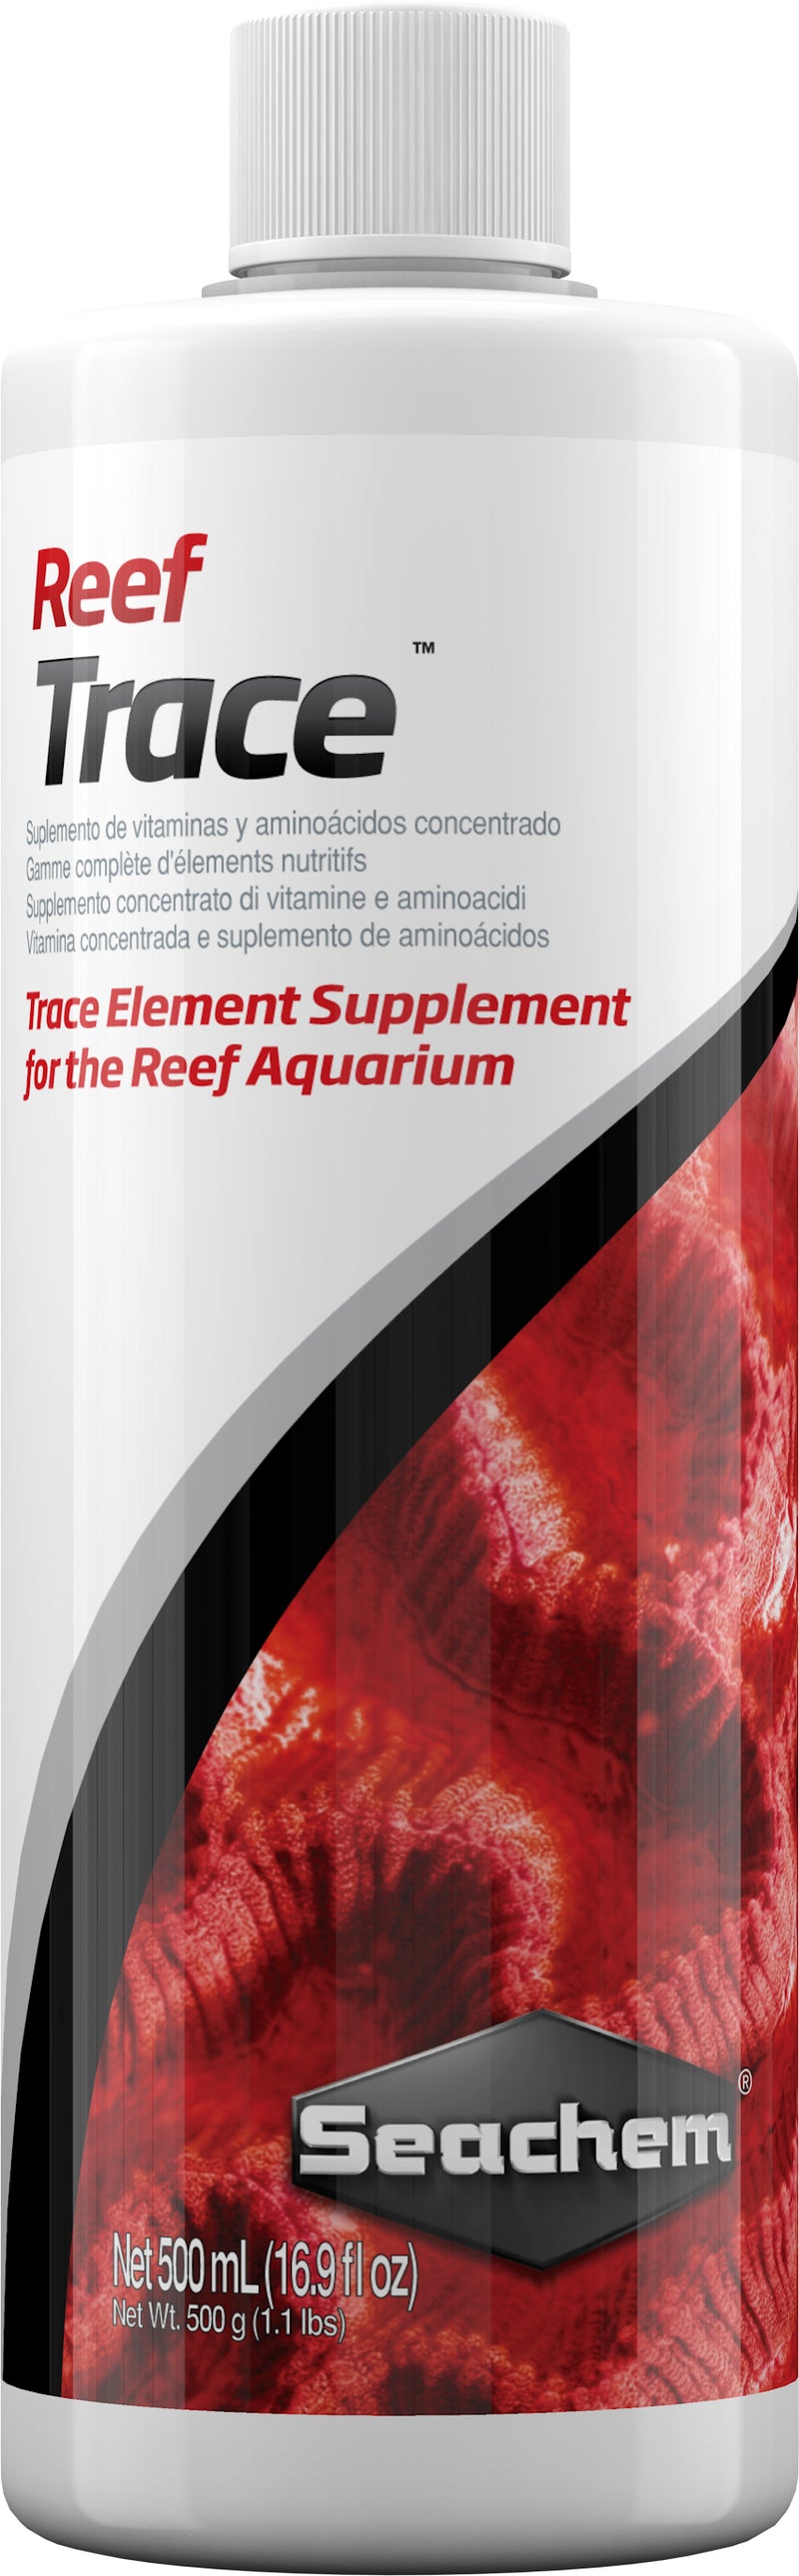 Seachem Reef Trace - 500 ml